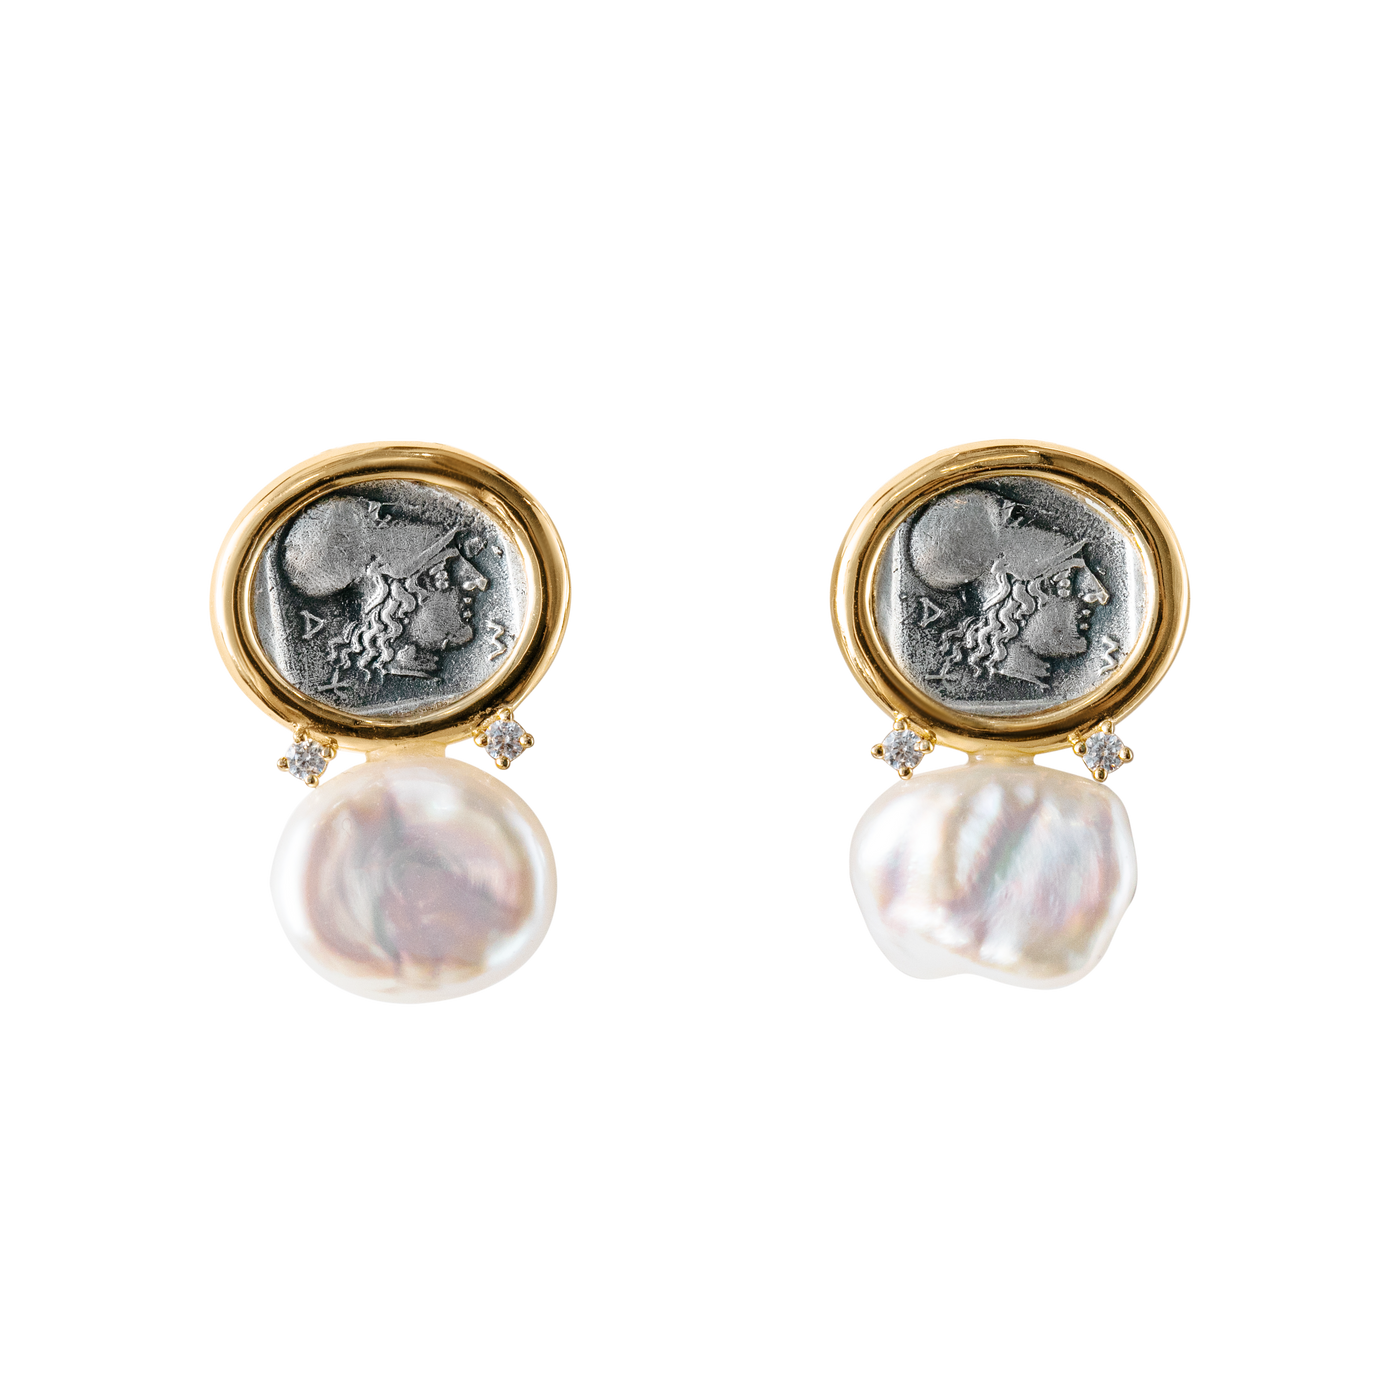 Vulcanus Prelude series Athena drop earrings